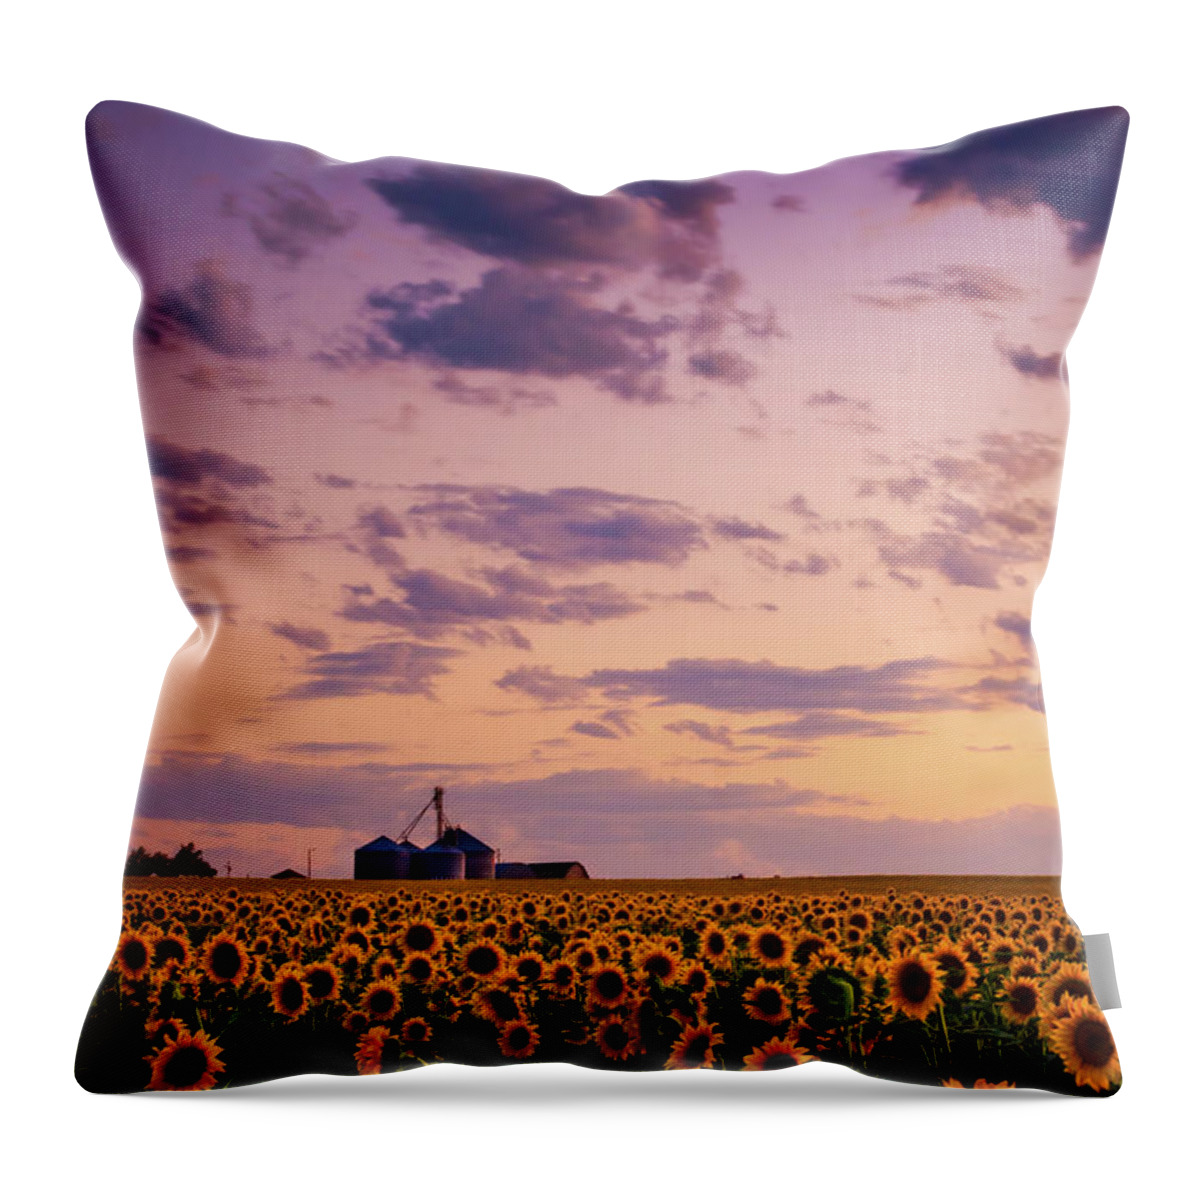 Colorado Throw Pillow featuring the photograph Skies Above The Sunflower Farm by John De Bord